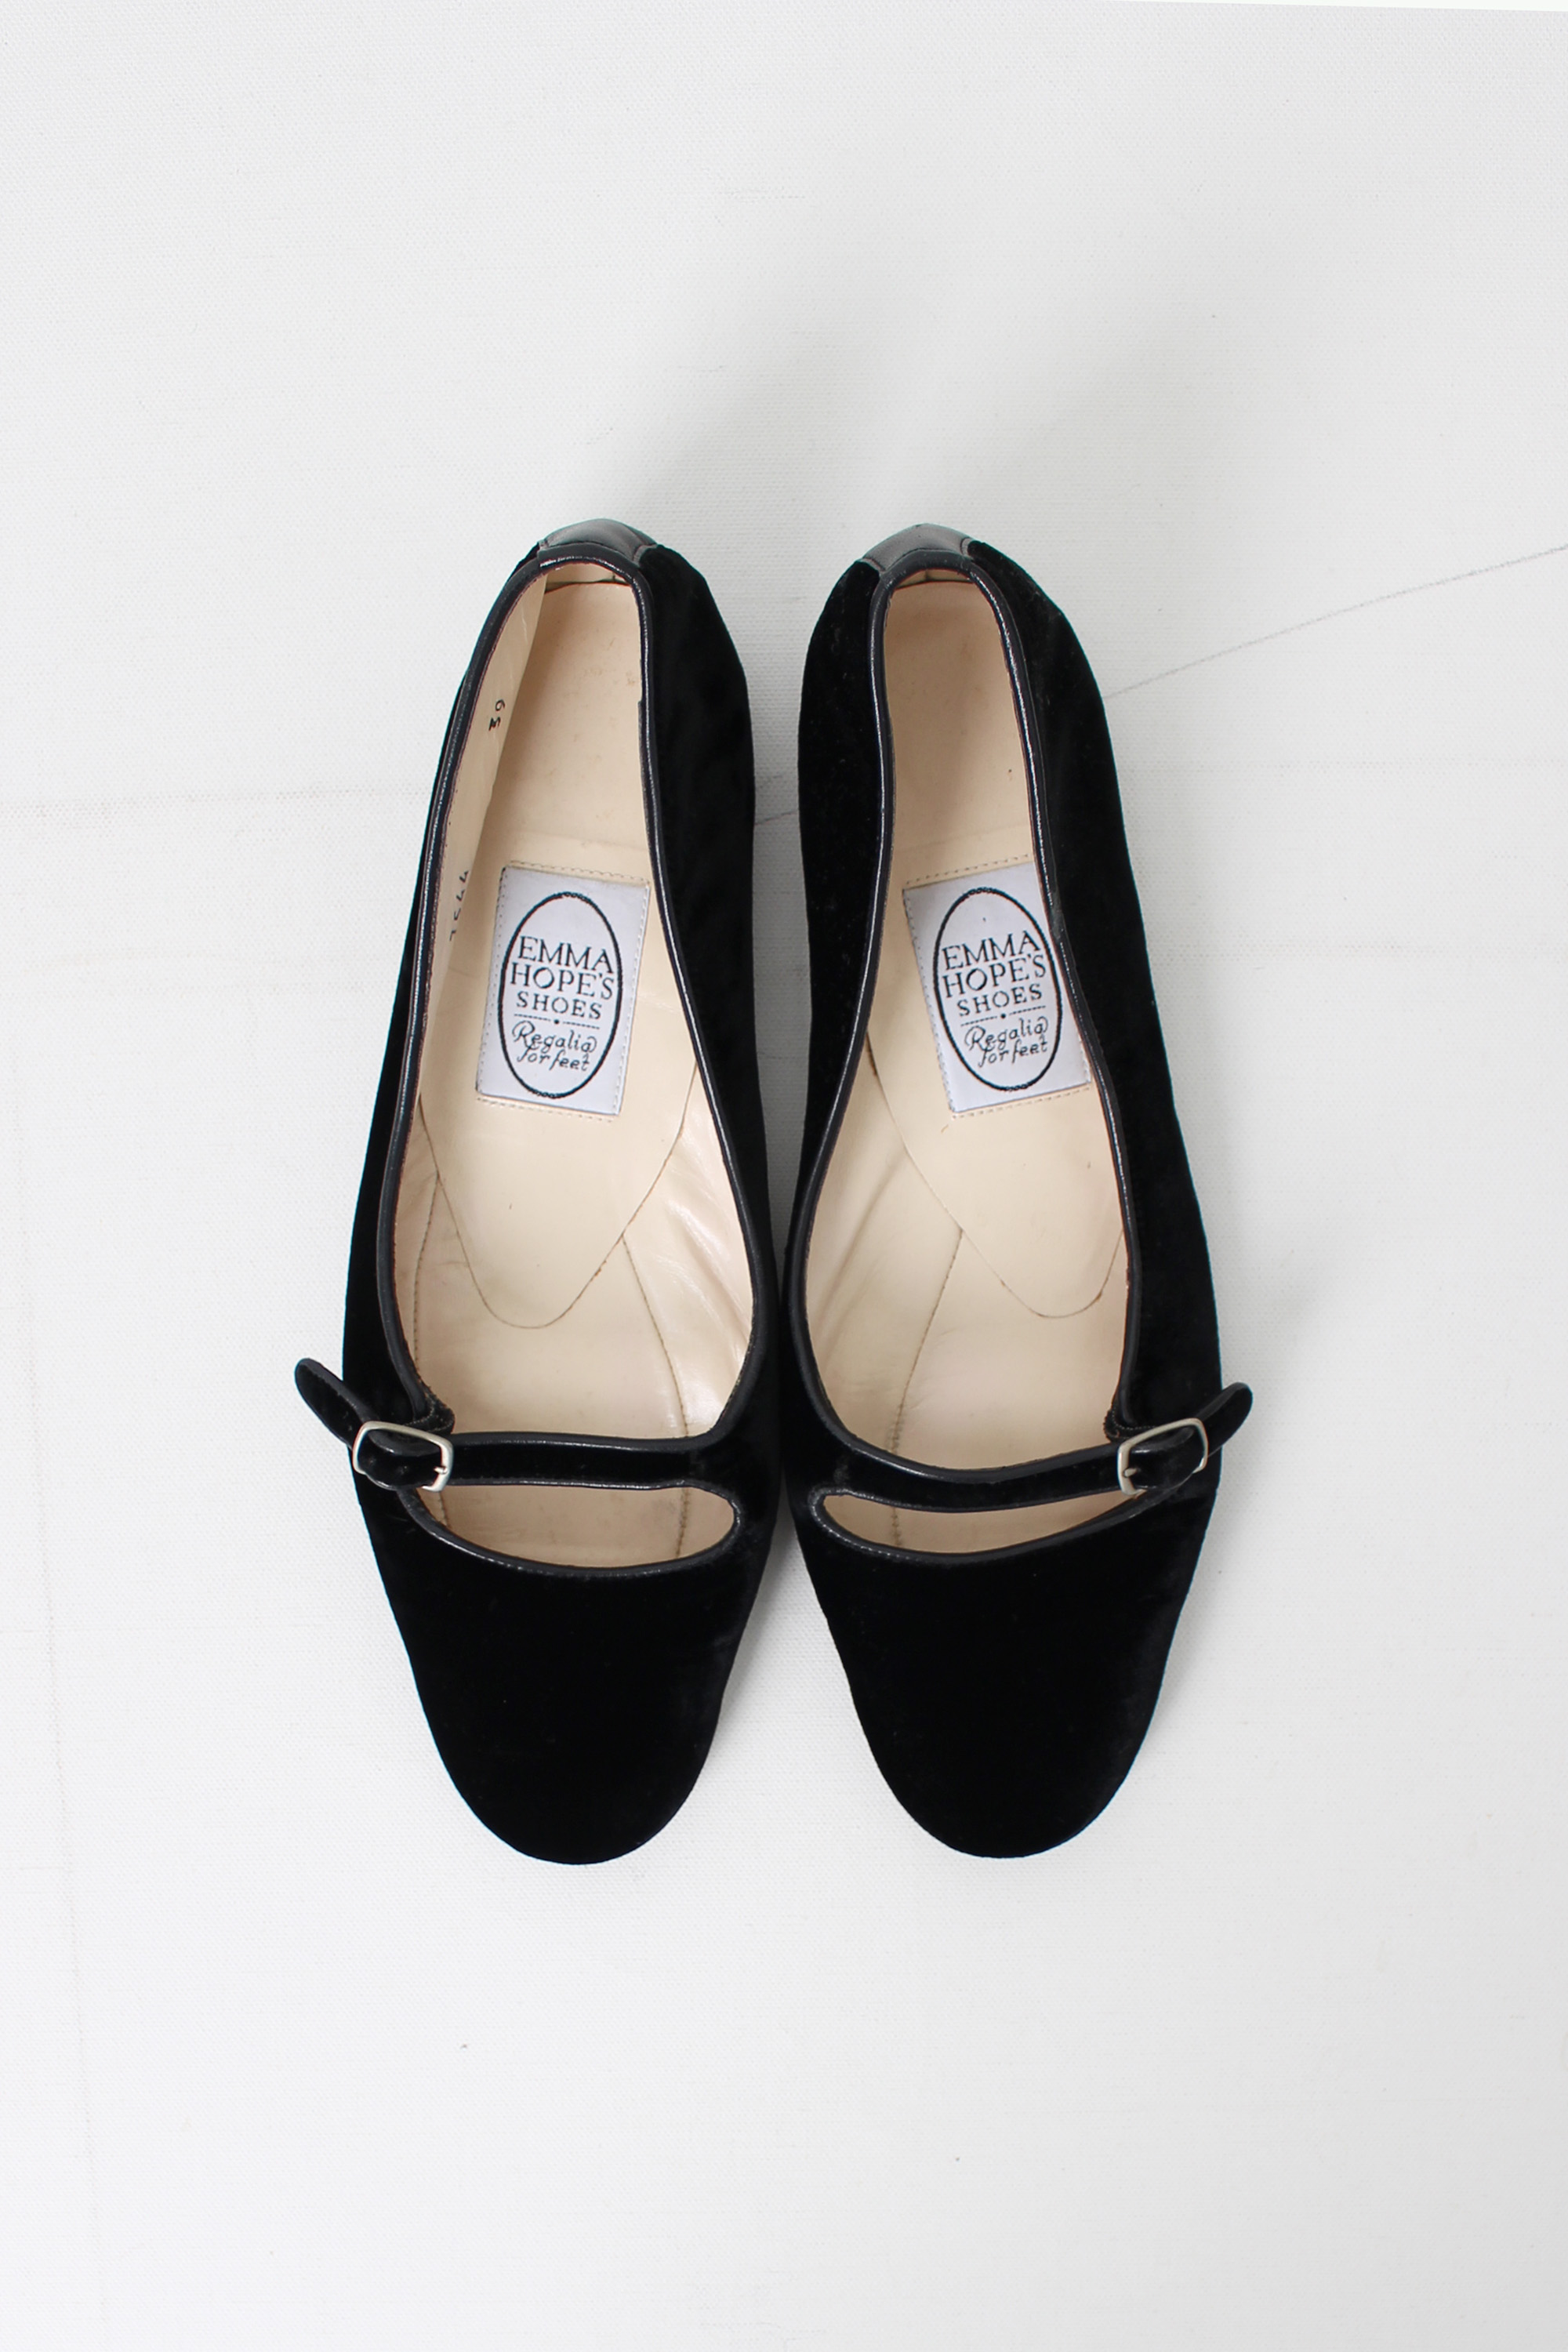 EMMA HOPE&#039;S mary jane shoes